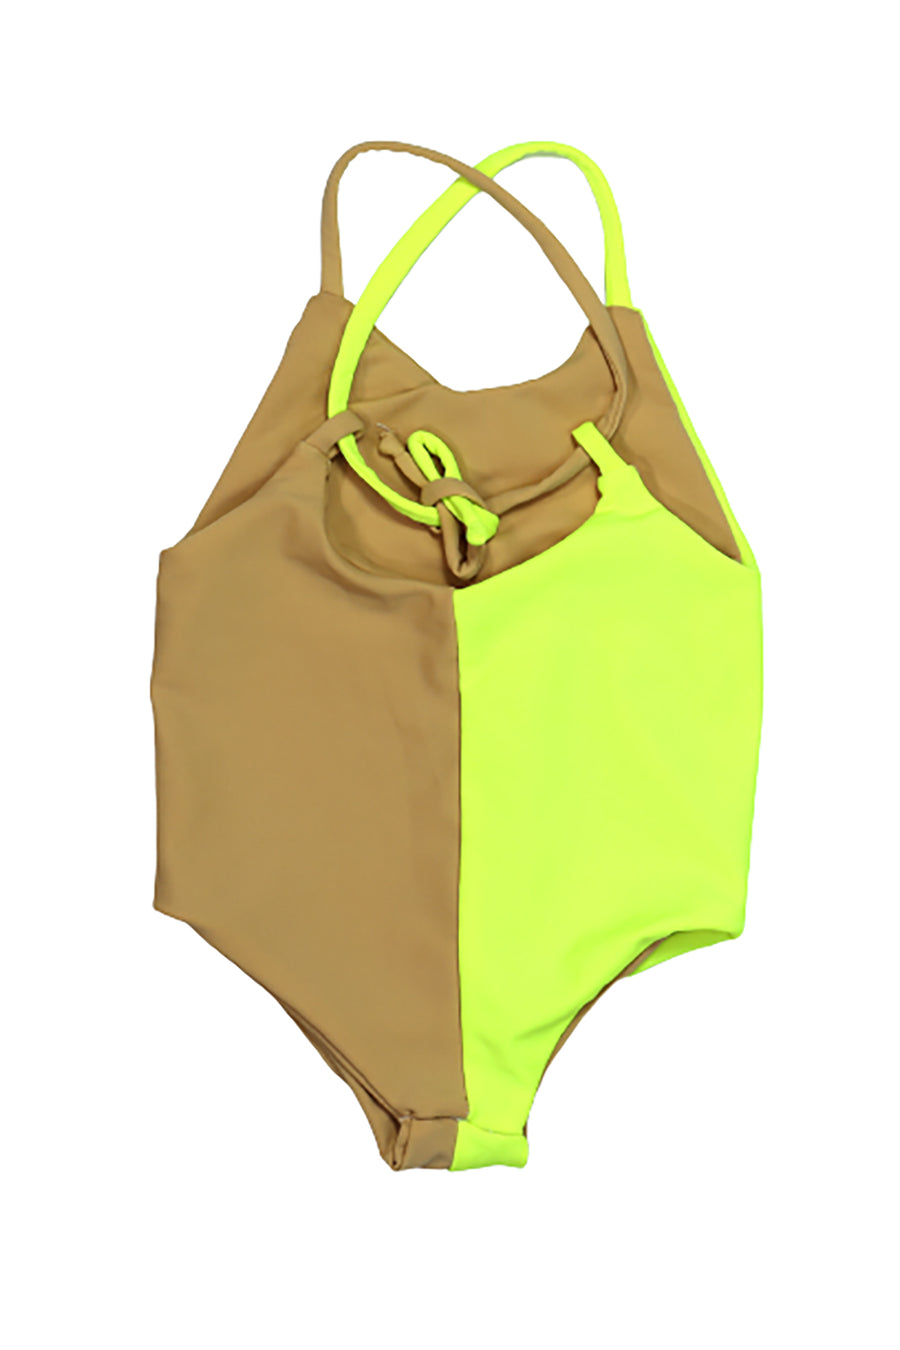 CELYNE  swimsuit  Neon yellow - HOLY SHE - HOWTOKiSSAFROG